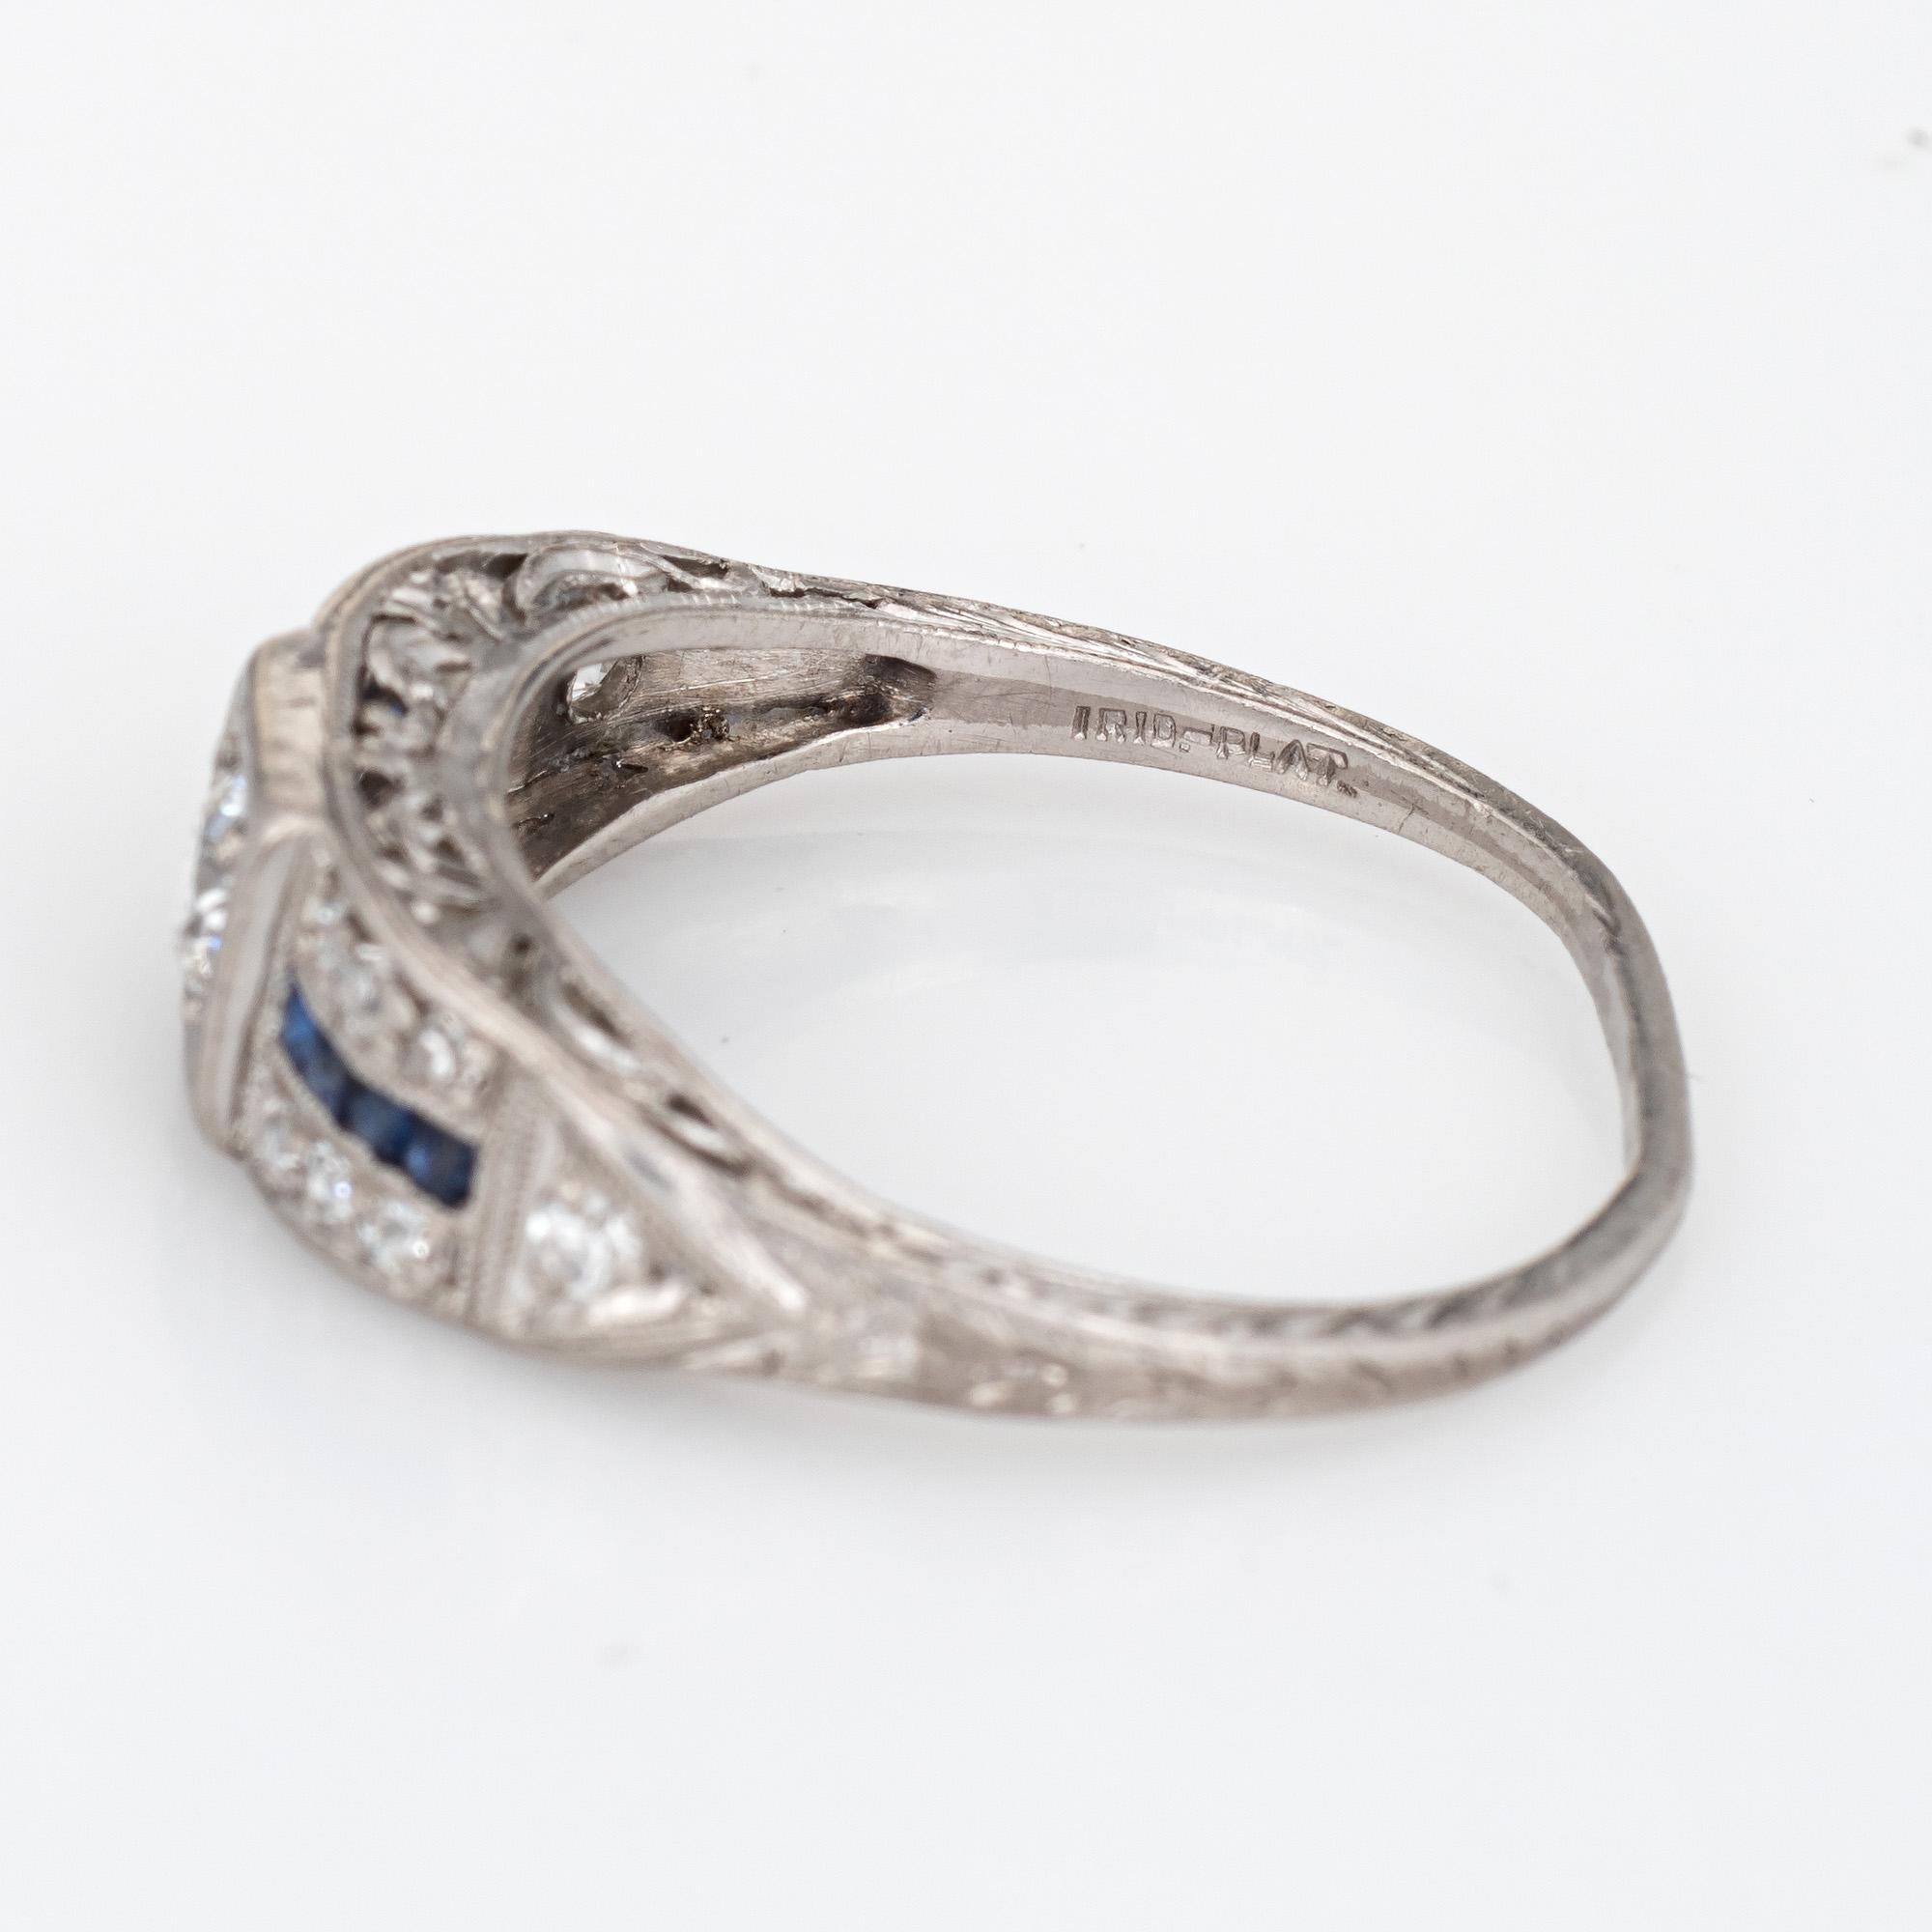 Vintage Art Deco Diamond Ring French Cut Sapphire Platinum Band Fine Jewelry 2